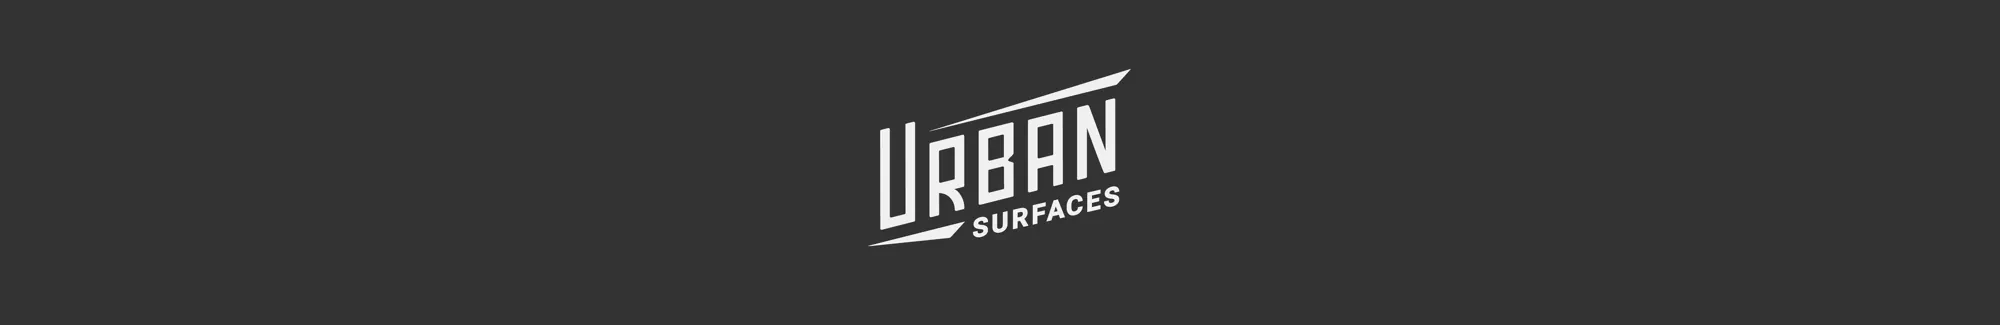 Urban Surfaces logo on black background